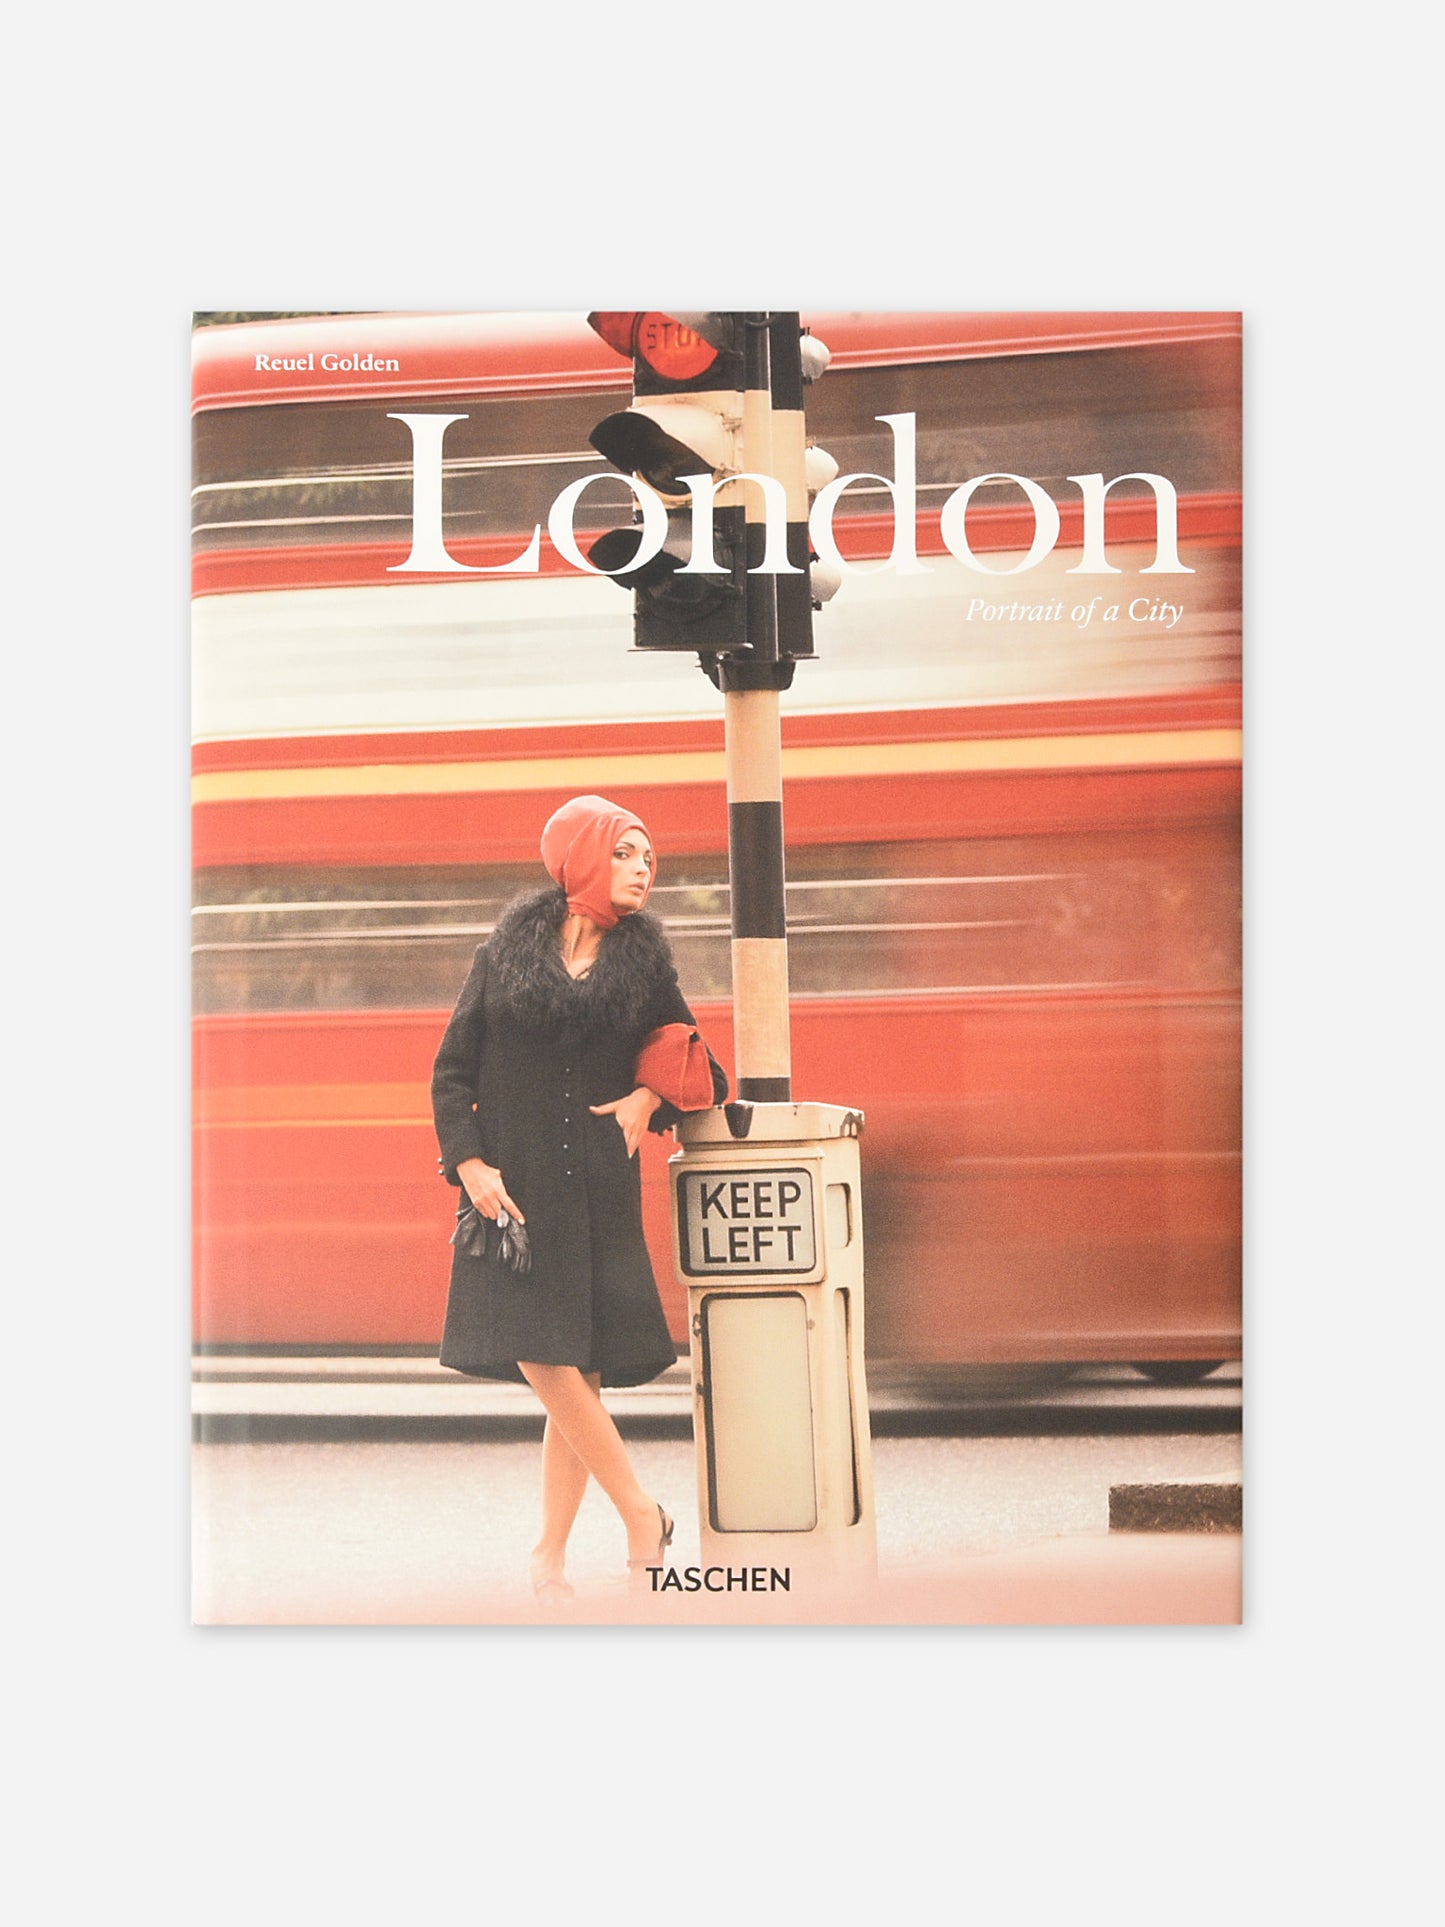 Taschen London: Portrait of a City